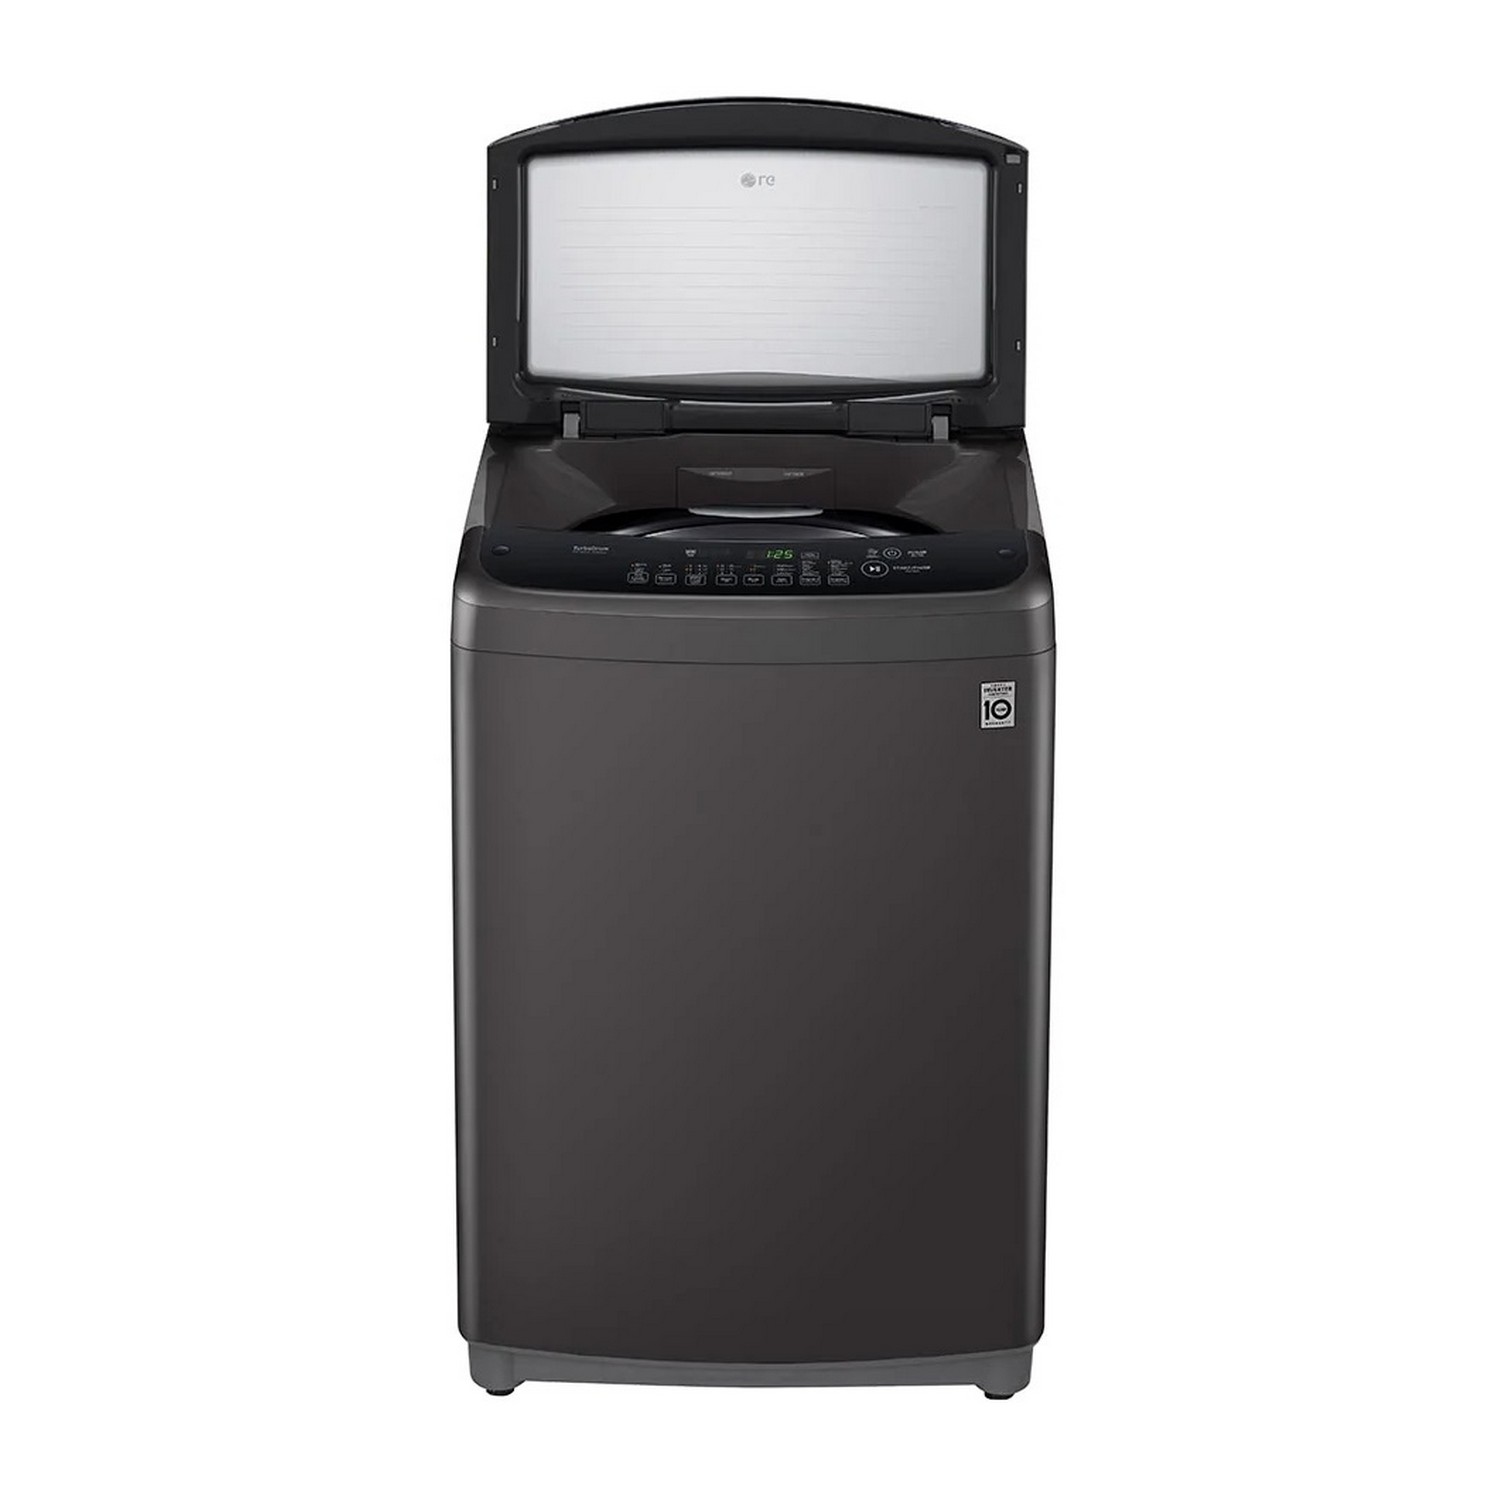 LG เครื่องซักผ้าฝาบน รุ่น T2313VS2B ระบบ Smart Inverter ความจุซัก 13 กก.